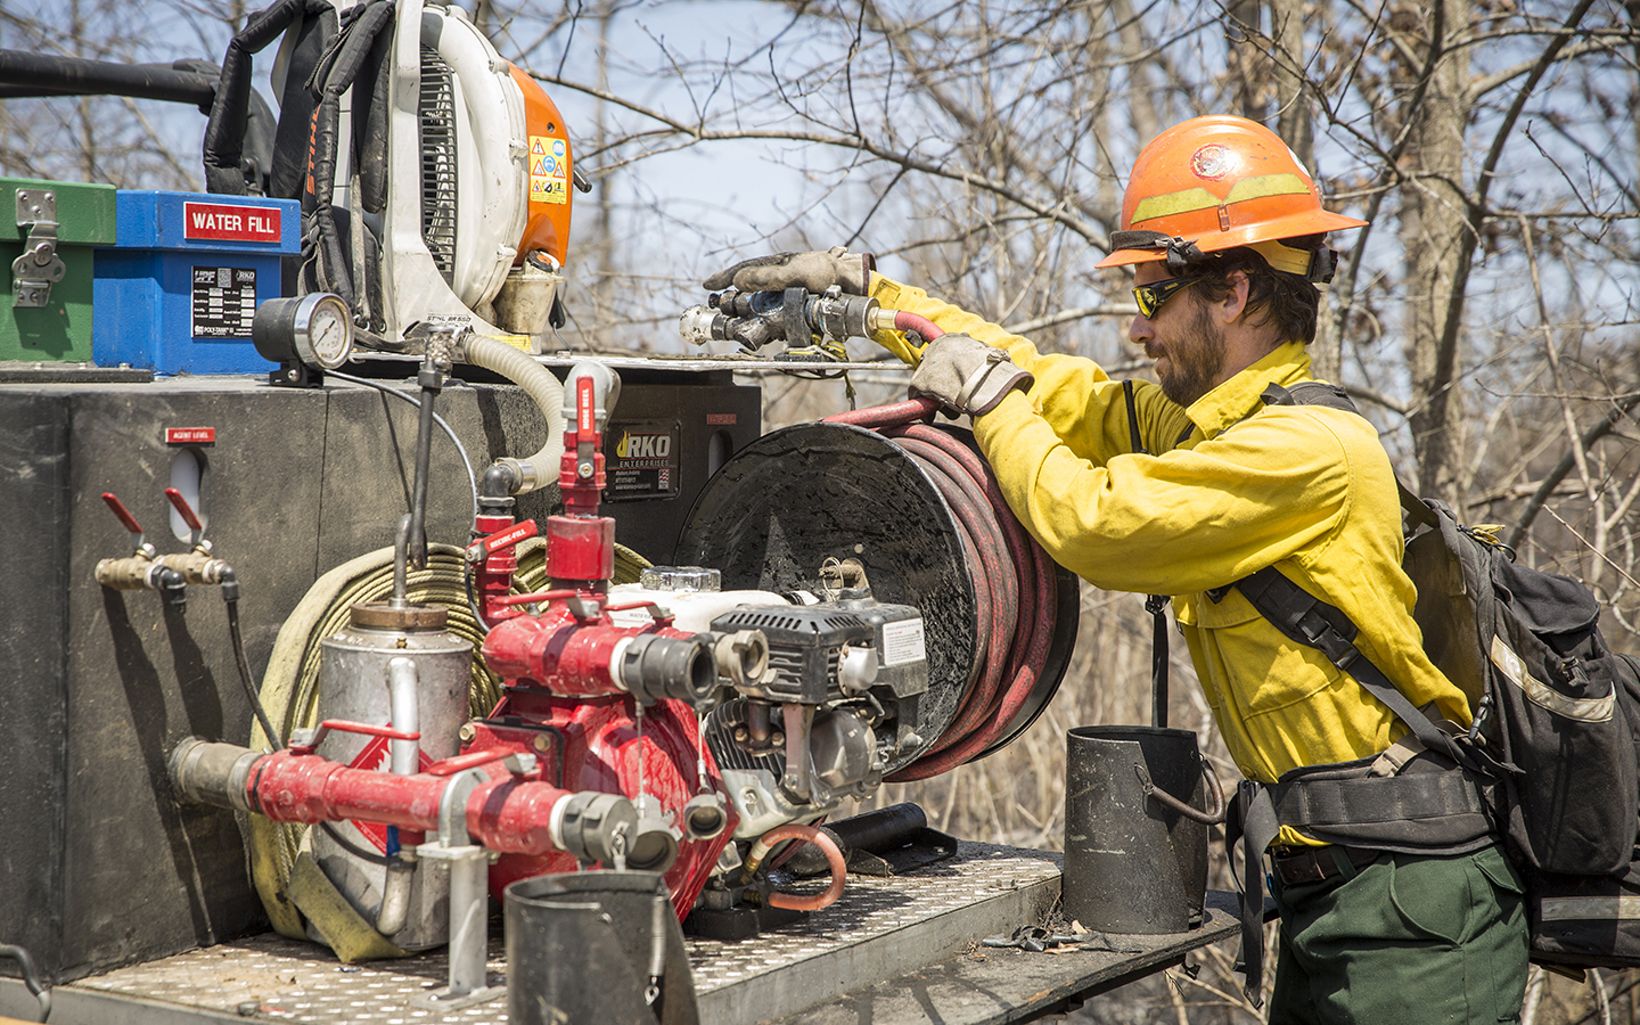 Prescribed Fire Pickett checks a water hose before a prescribed burn. © Mike Wilkinson